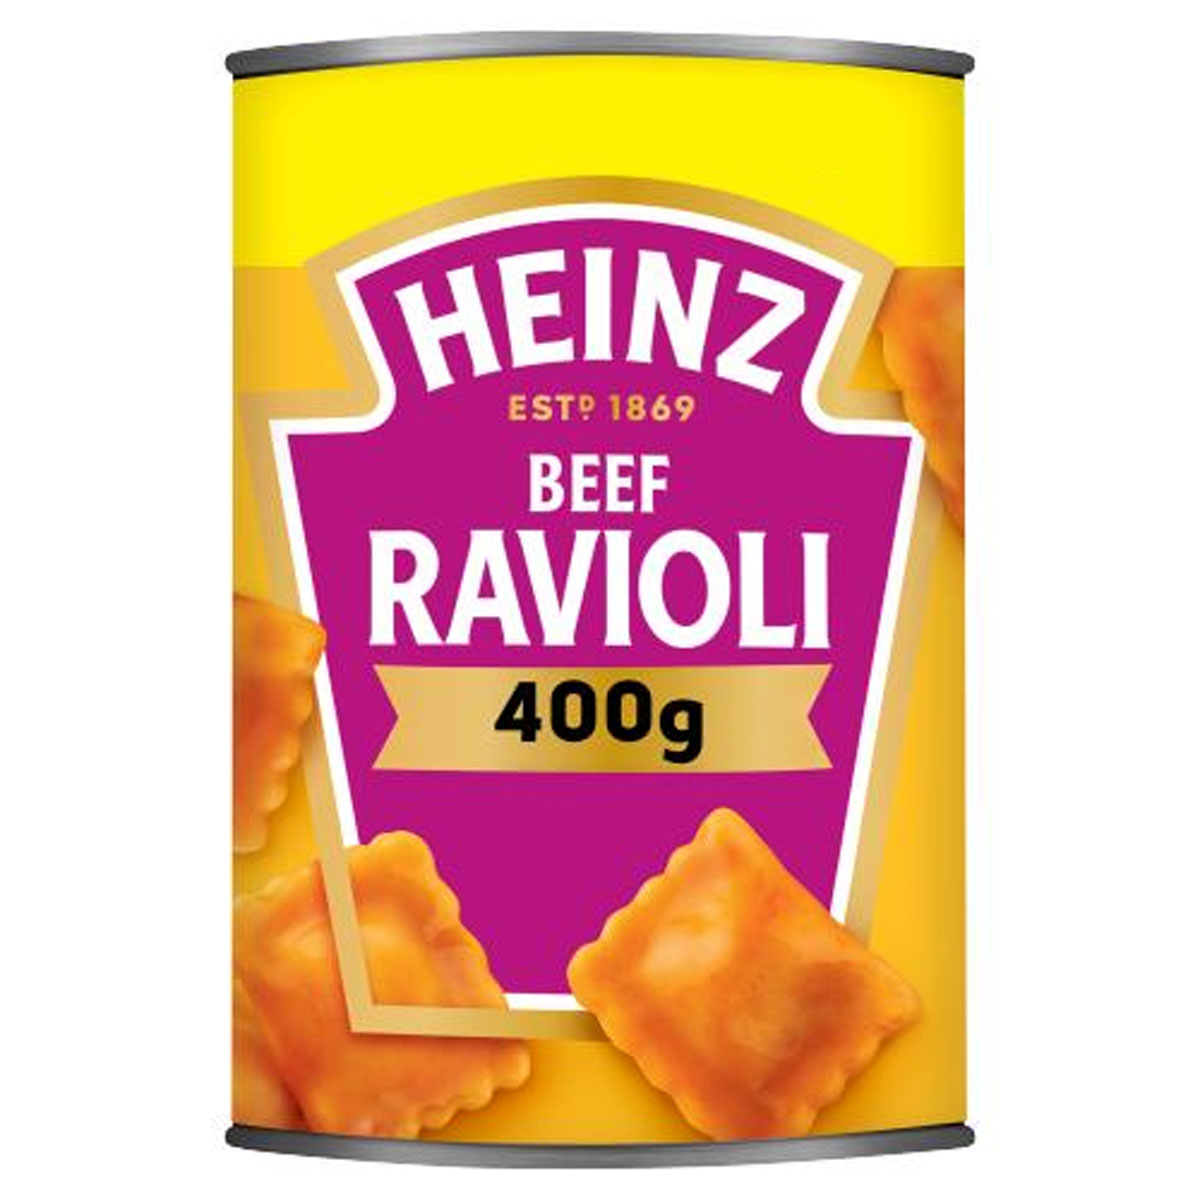 Heinz - Beef Ravioli - 400g.